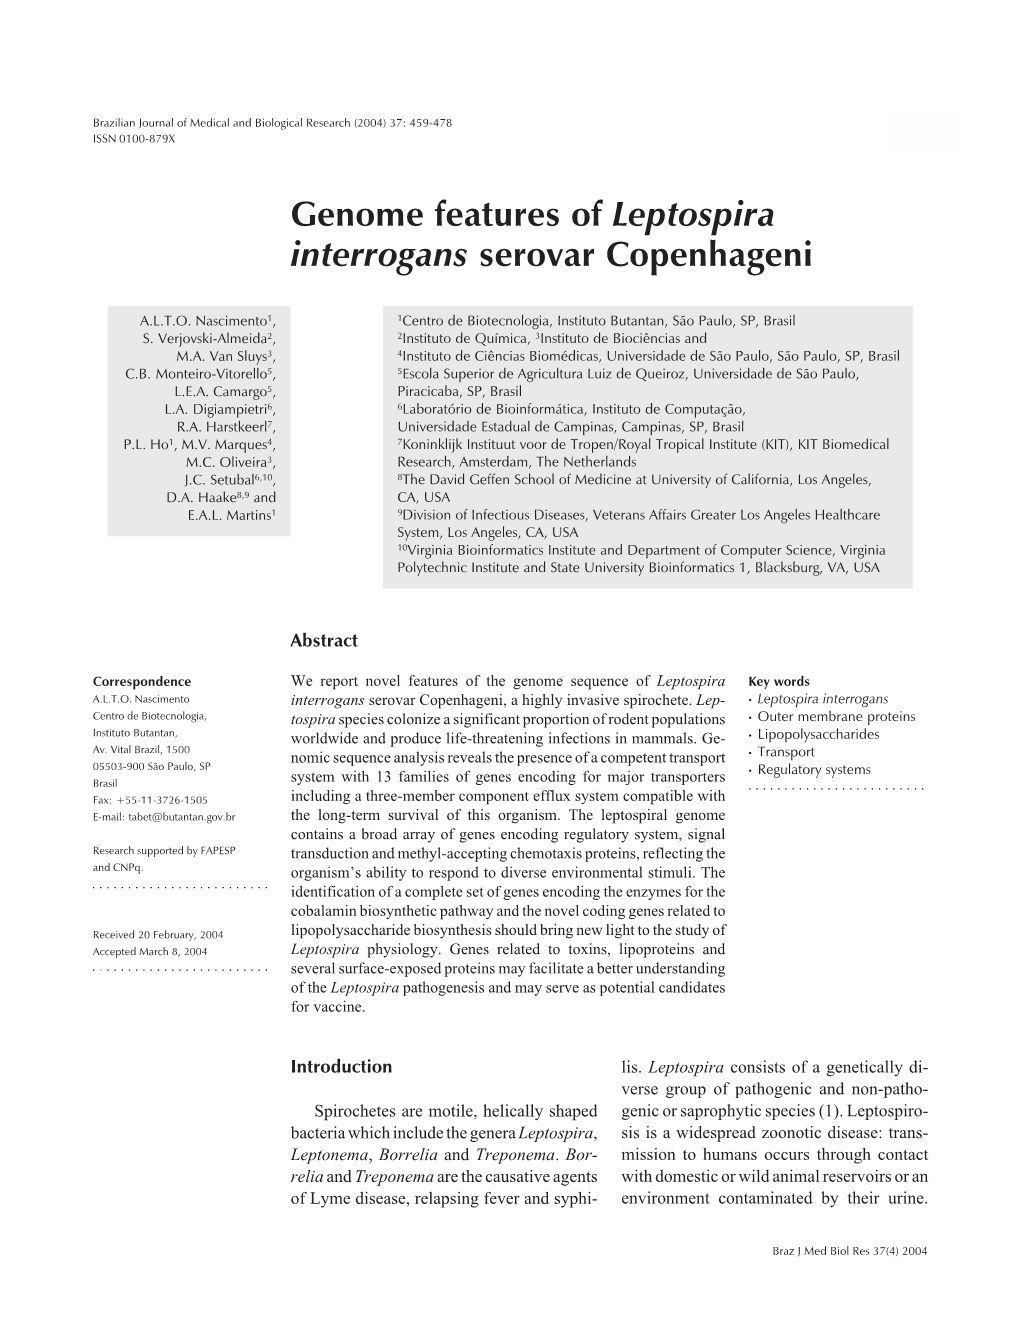 Genome Features of Leptospira Interrogans Serovar Copenhageni